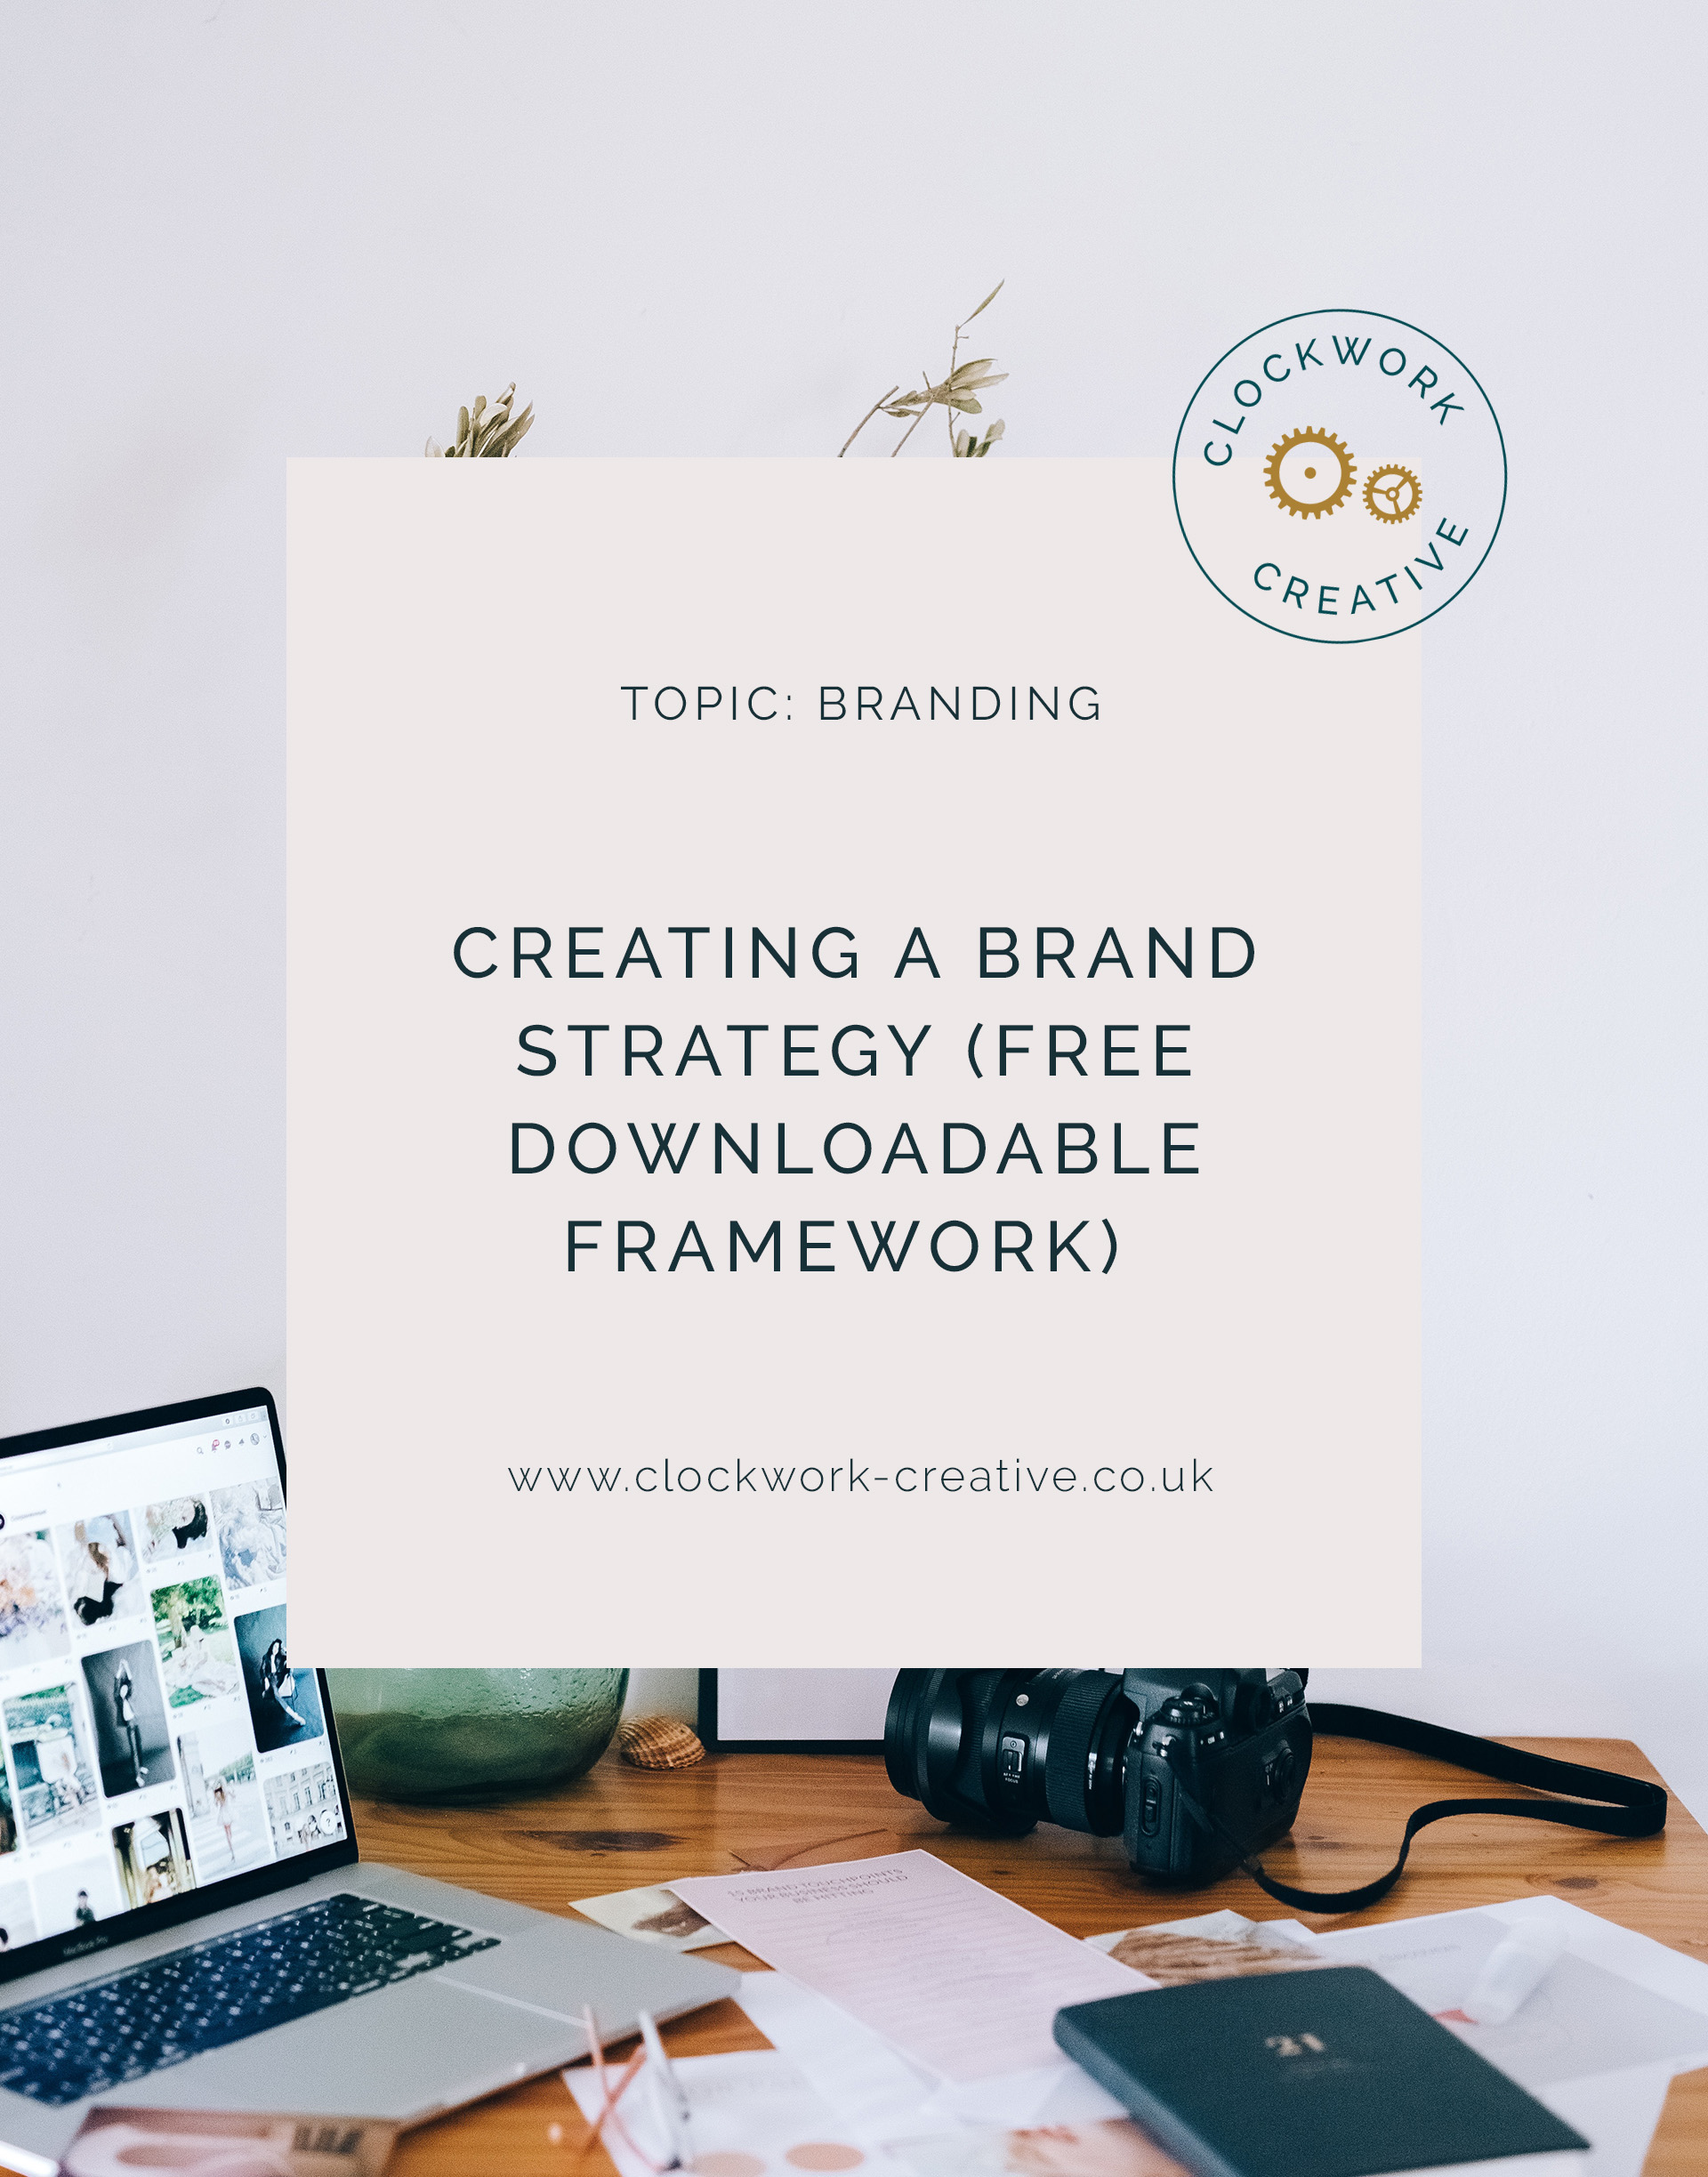 Free downloadable brand strategy framework